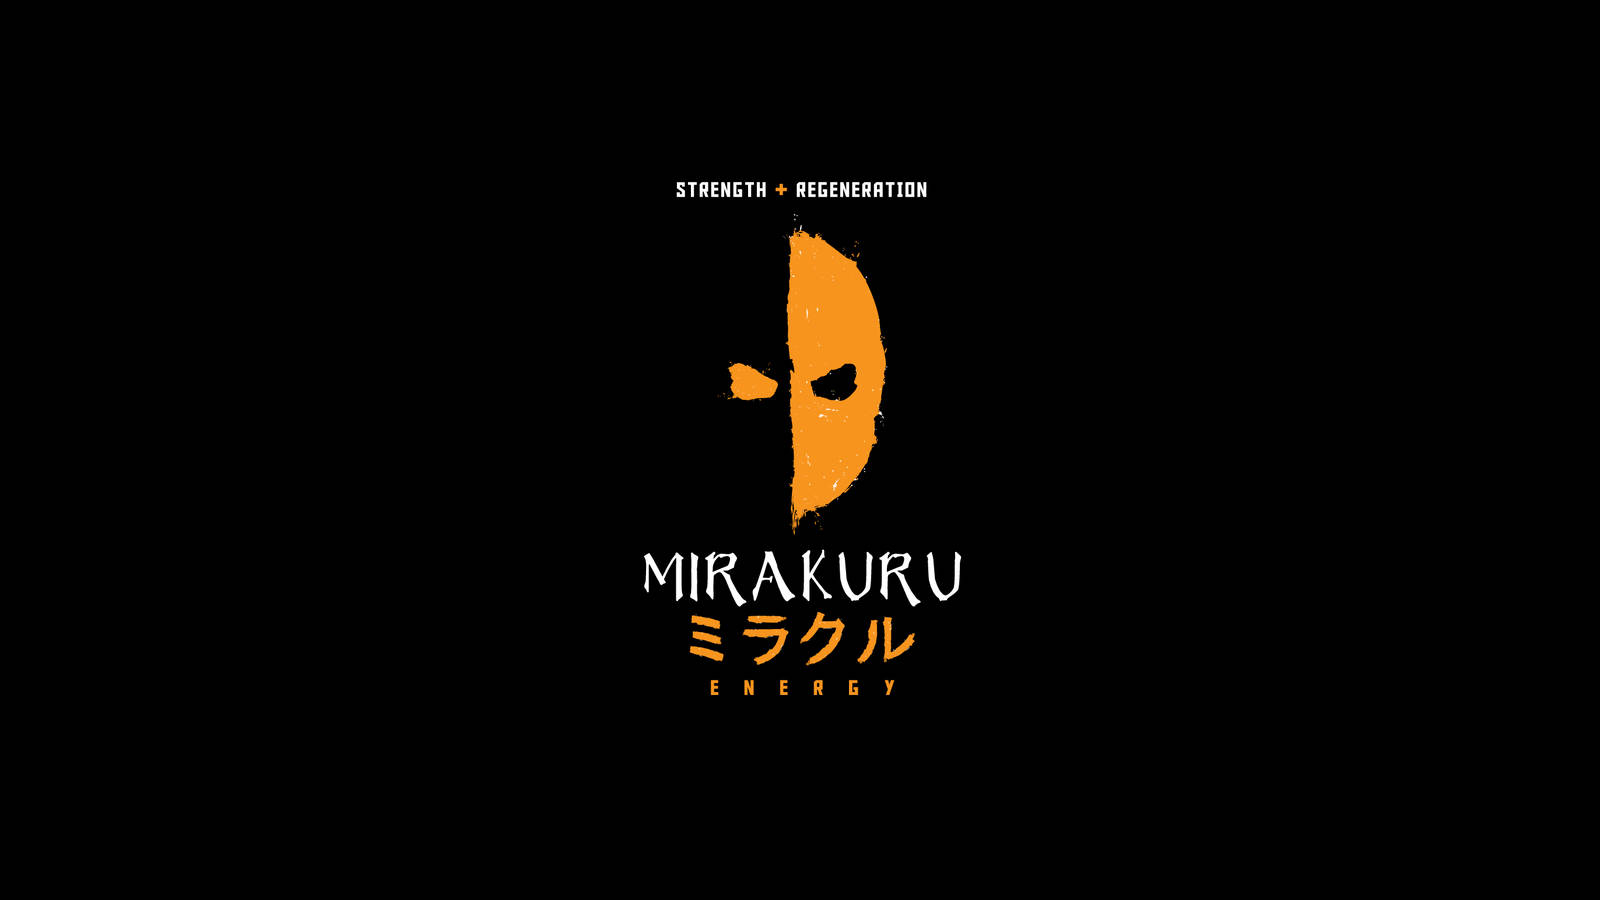 Deathstroke Mirakuru, Hd Tv Shows, 4k Wallpaper, Image Wallpaper